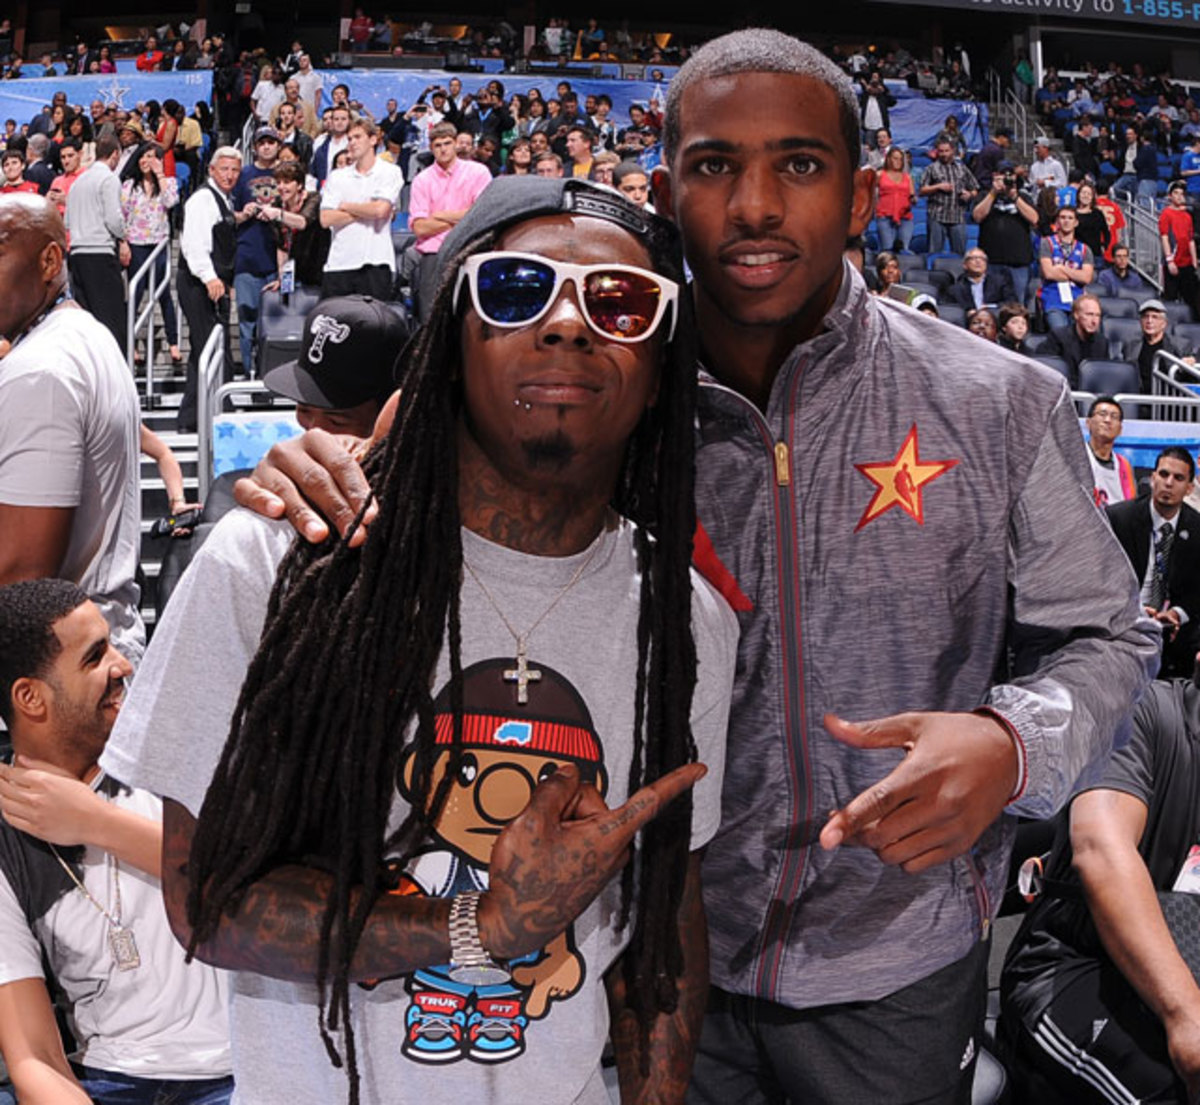  Chris Paul and Lil Wayne